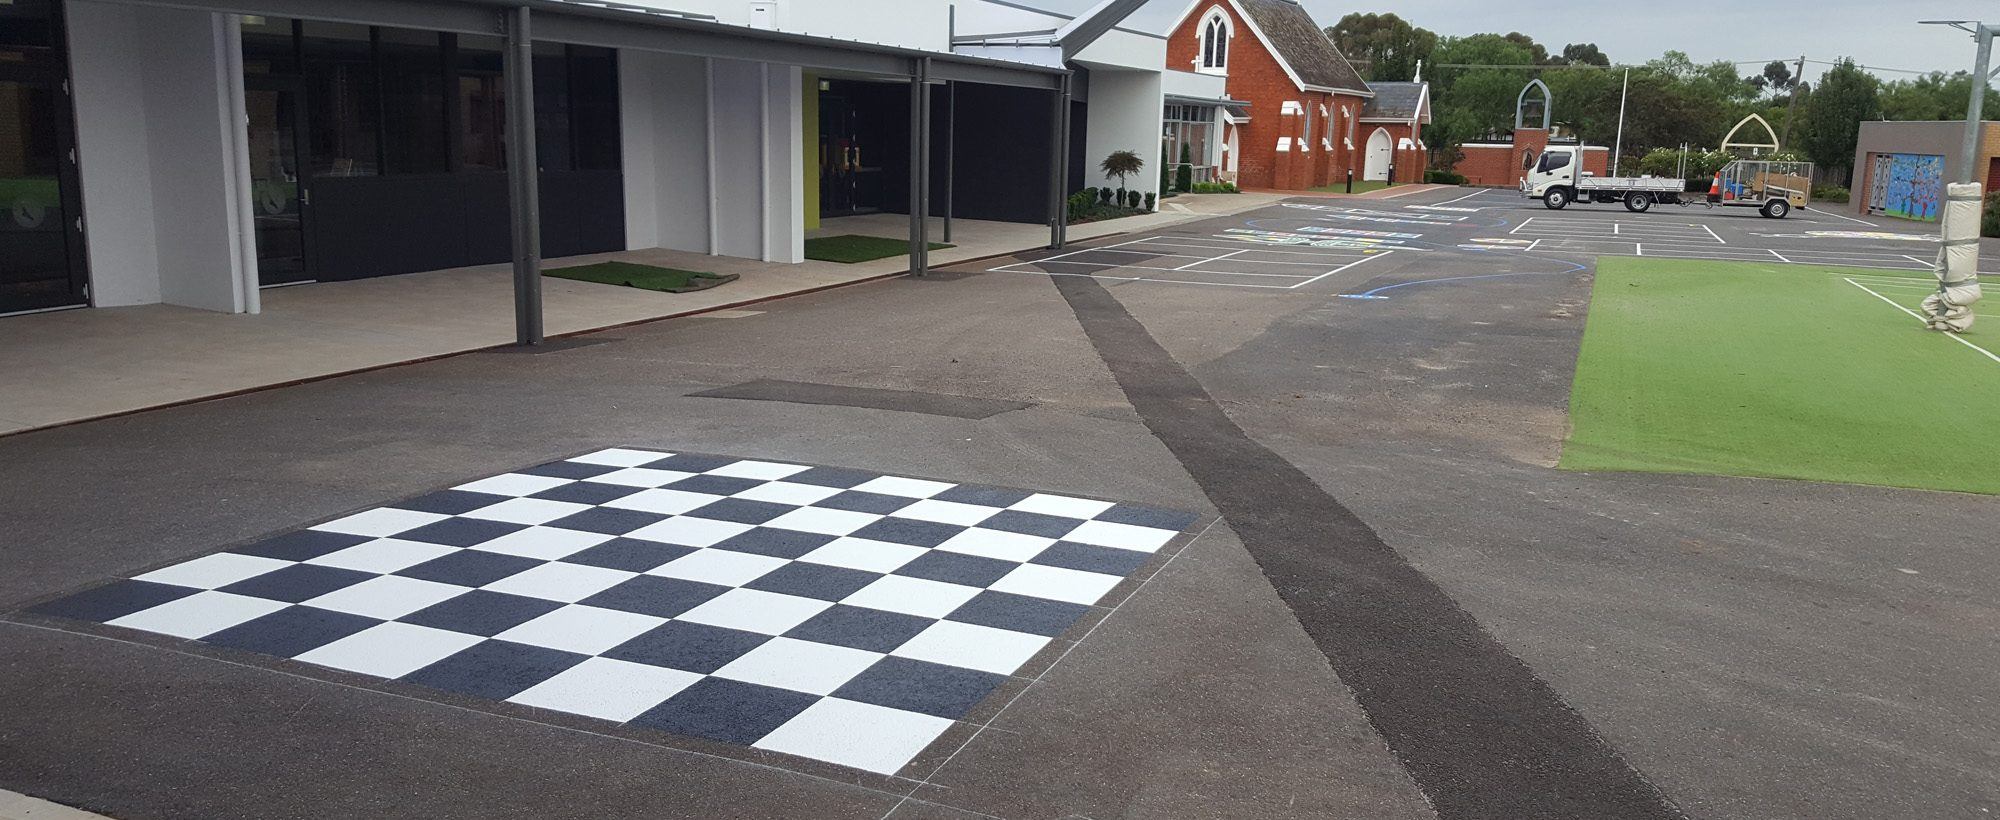 Outdoor-School-Playground-Chess-Board-Line-Marking